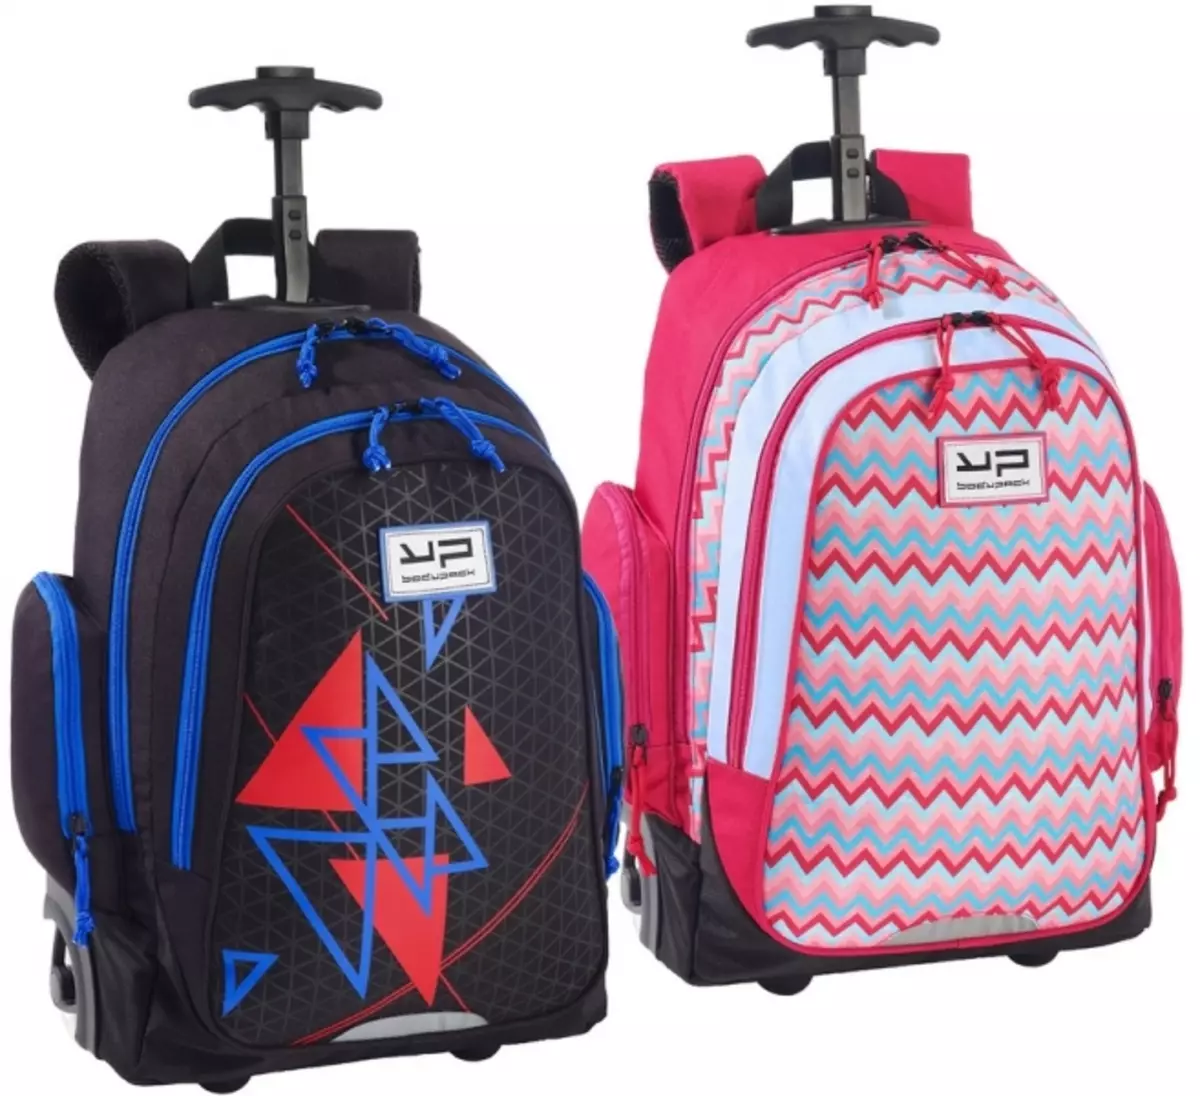 Bolsa de Feminina Backpack (96 fotos): O que usar modelos para a mãe de tecido e juventude, para laptop e rodas, para cidade e praia 2797_29